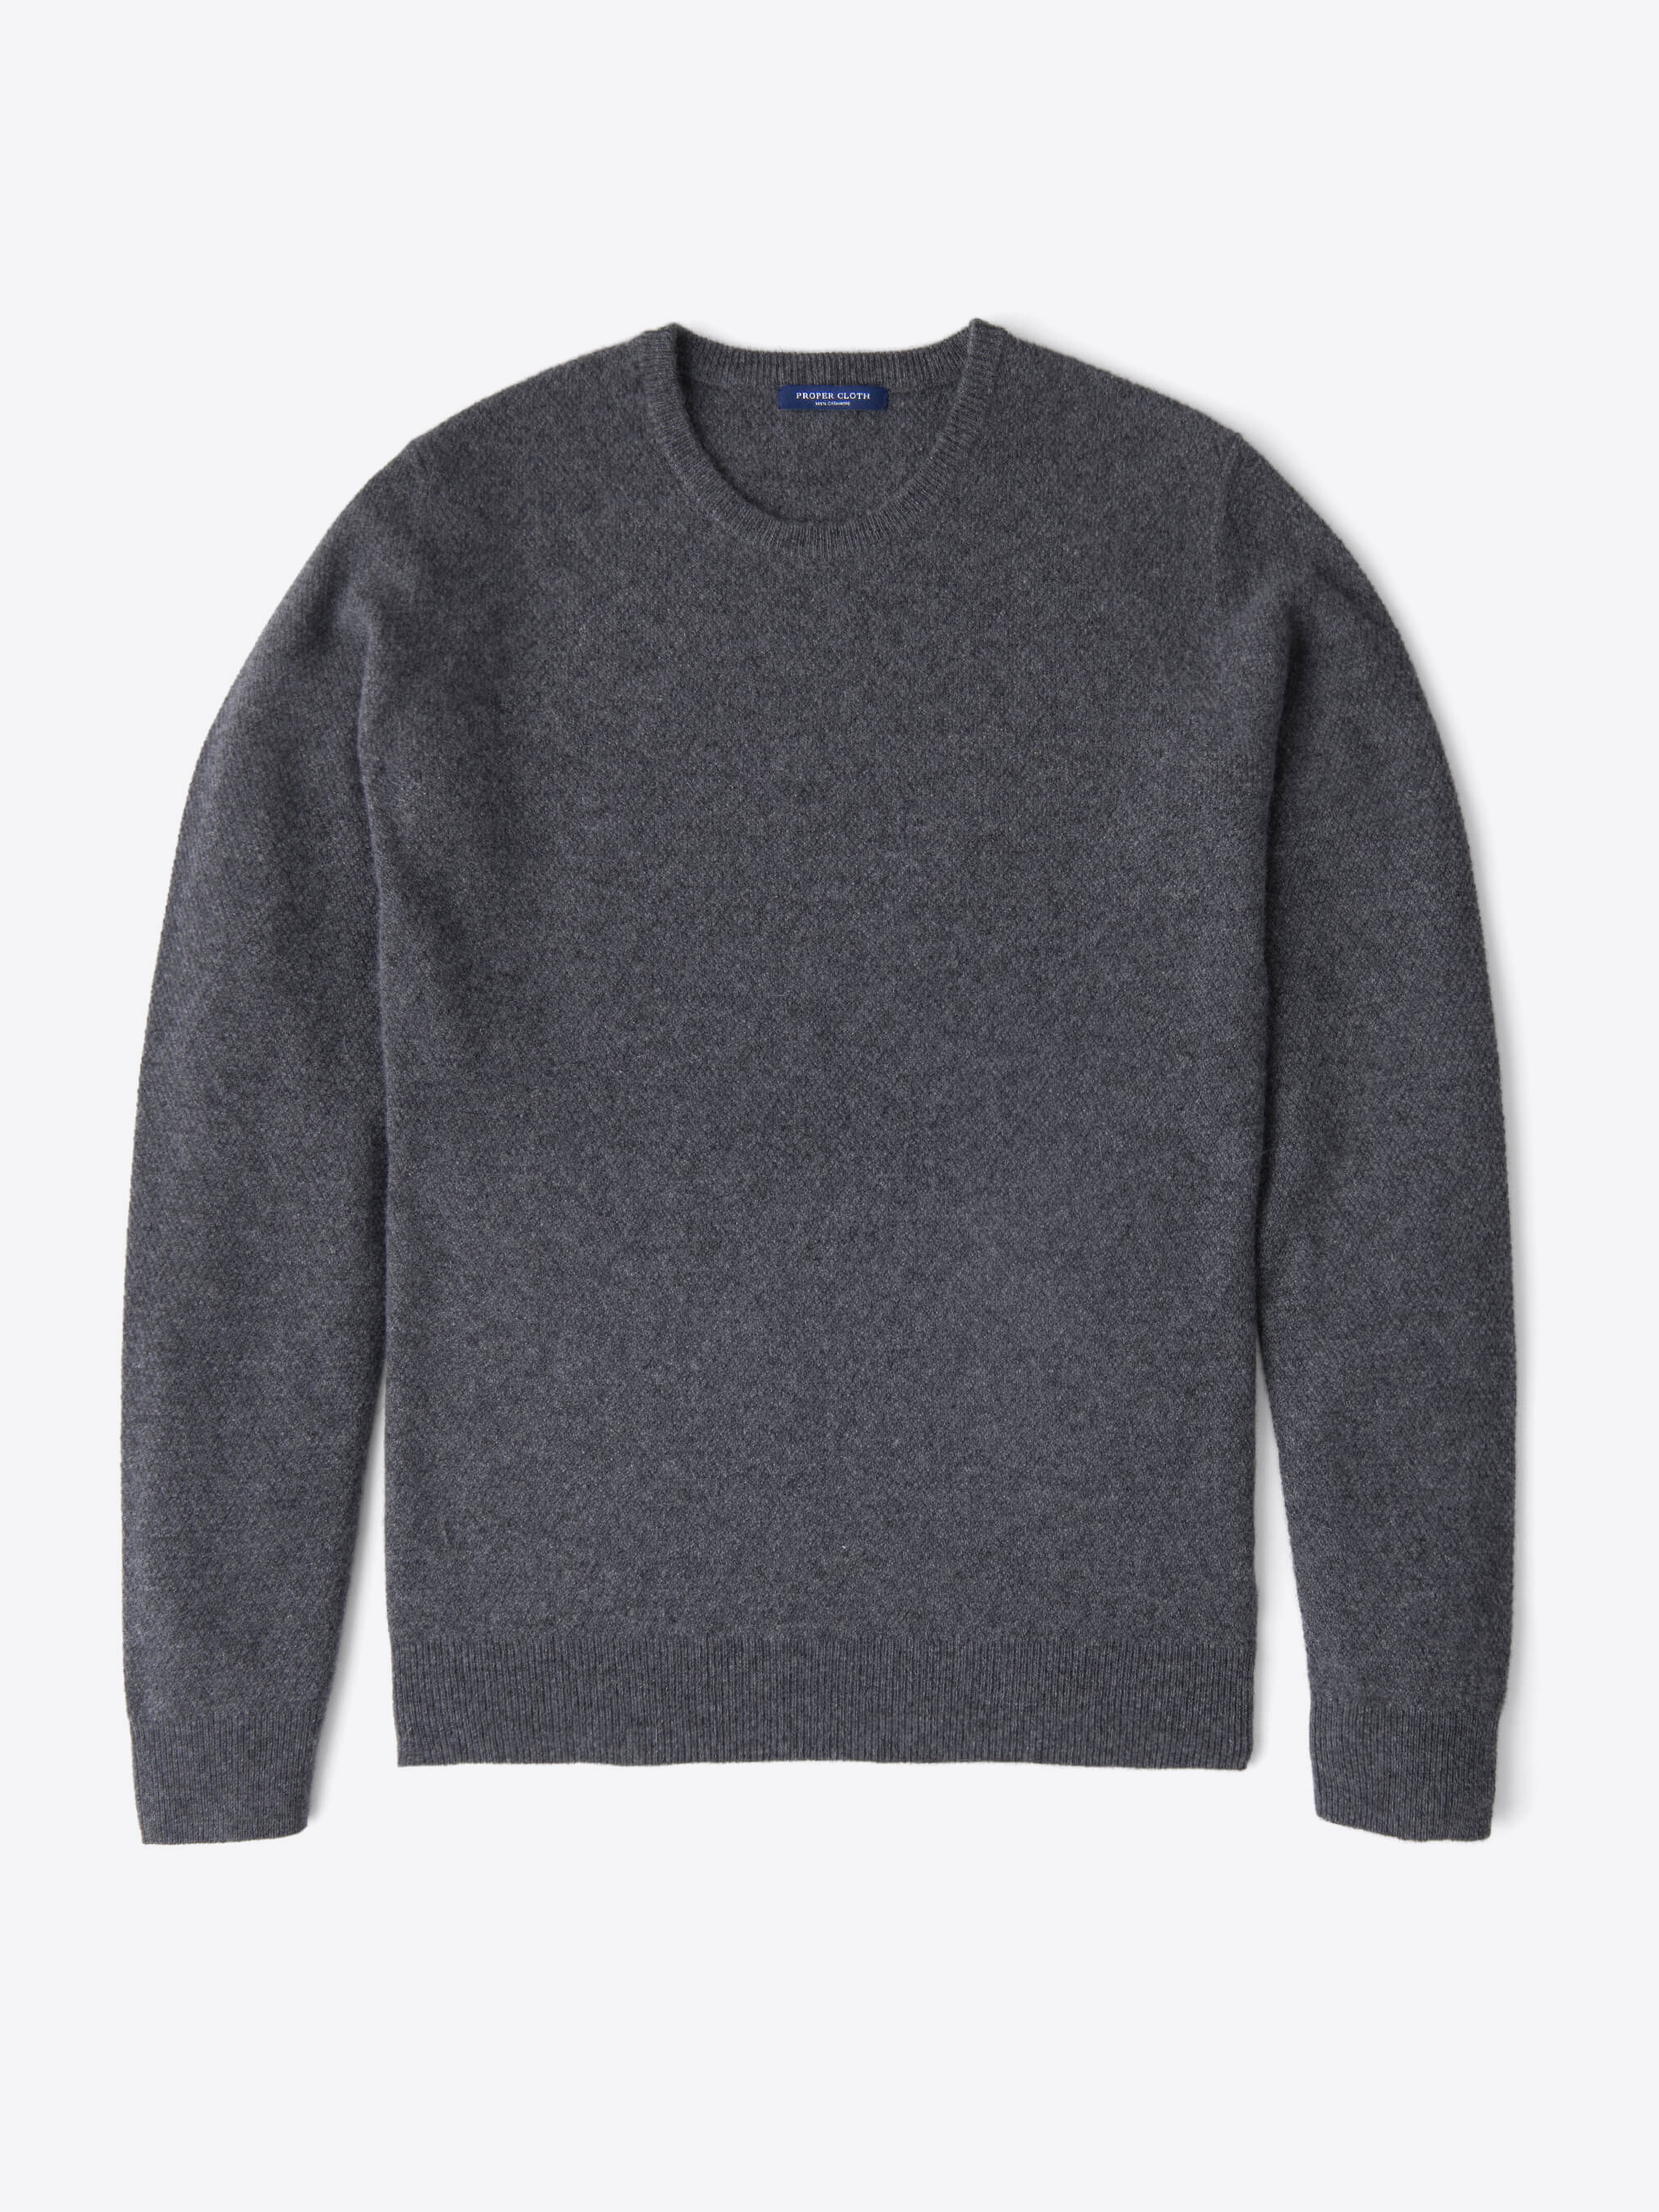 Zoom Image of Grey Cobble Stitch Cashmere Crewneck Sweater